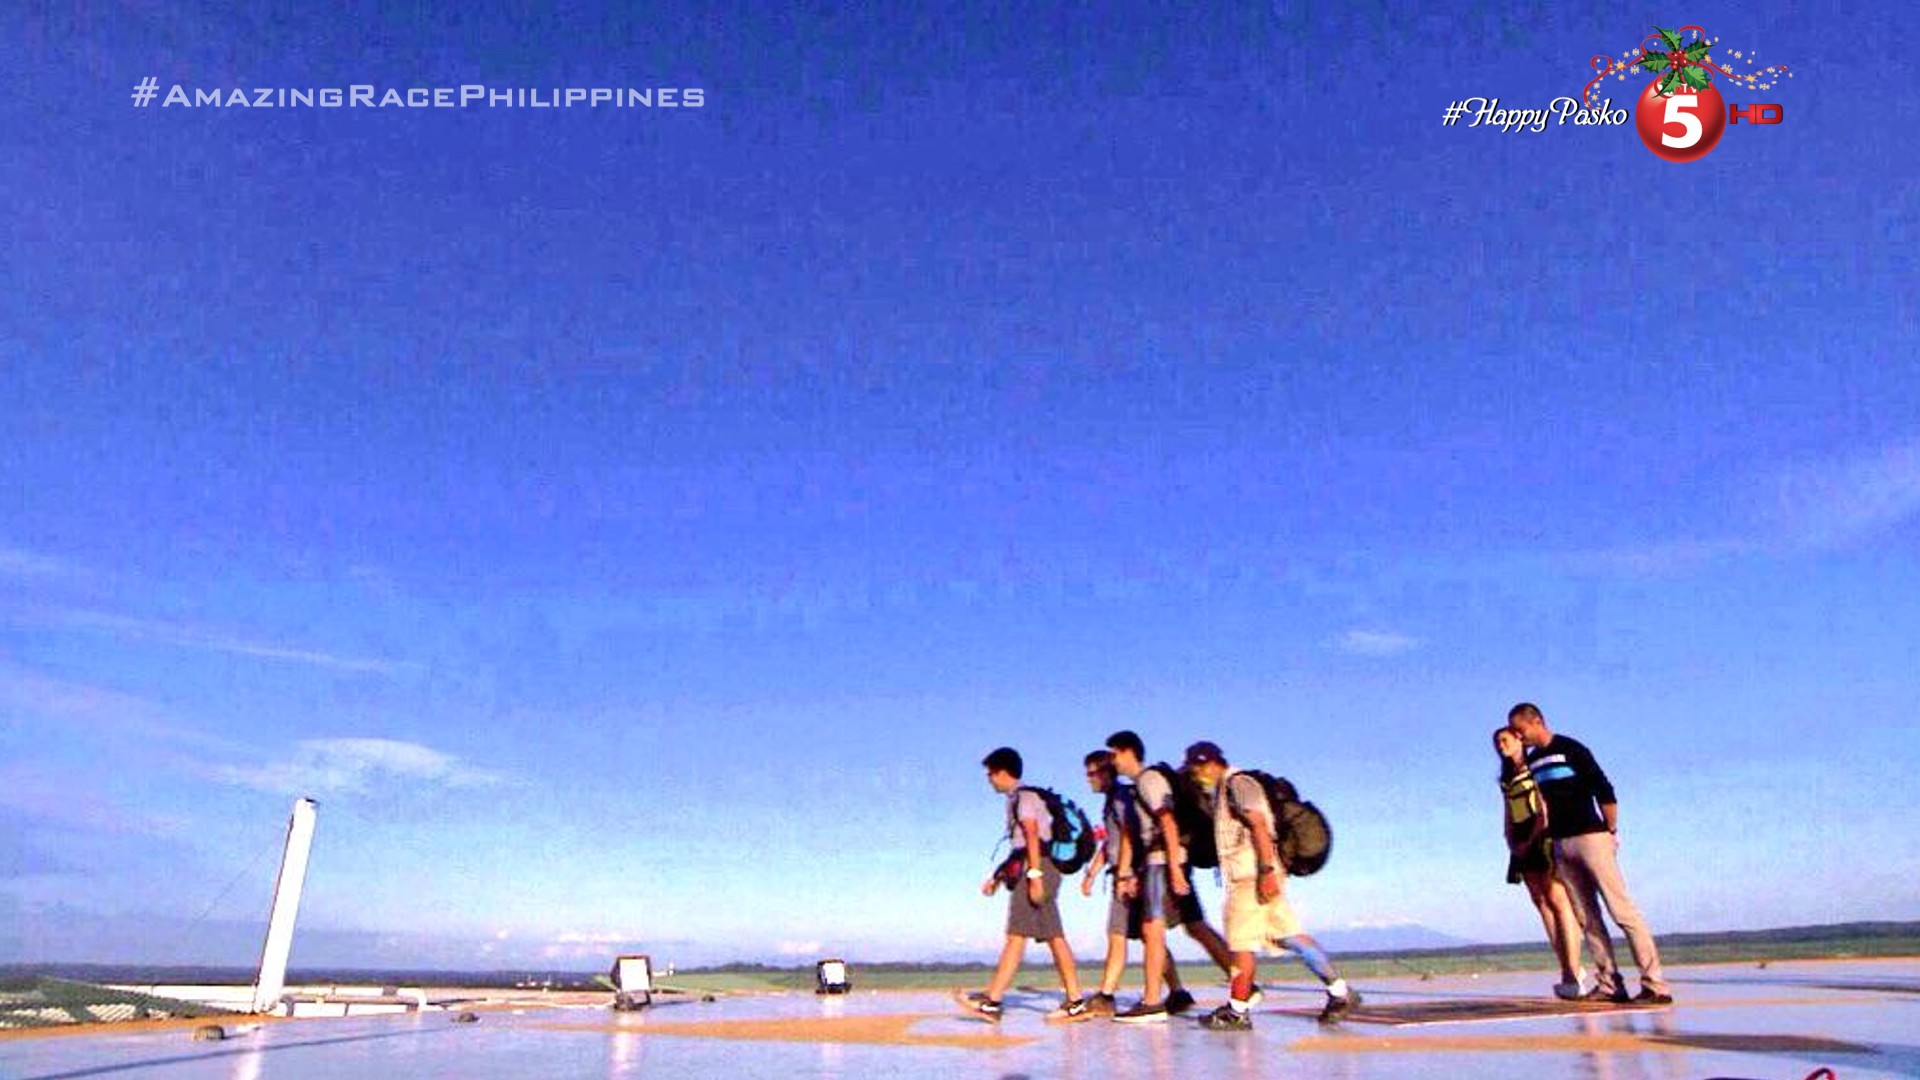 “Recap:” The Amazing Race Philippines 2, Episode 48 (Leg 8, Day 6) – “Ganyan naman ‘yung iba eh.”